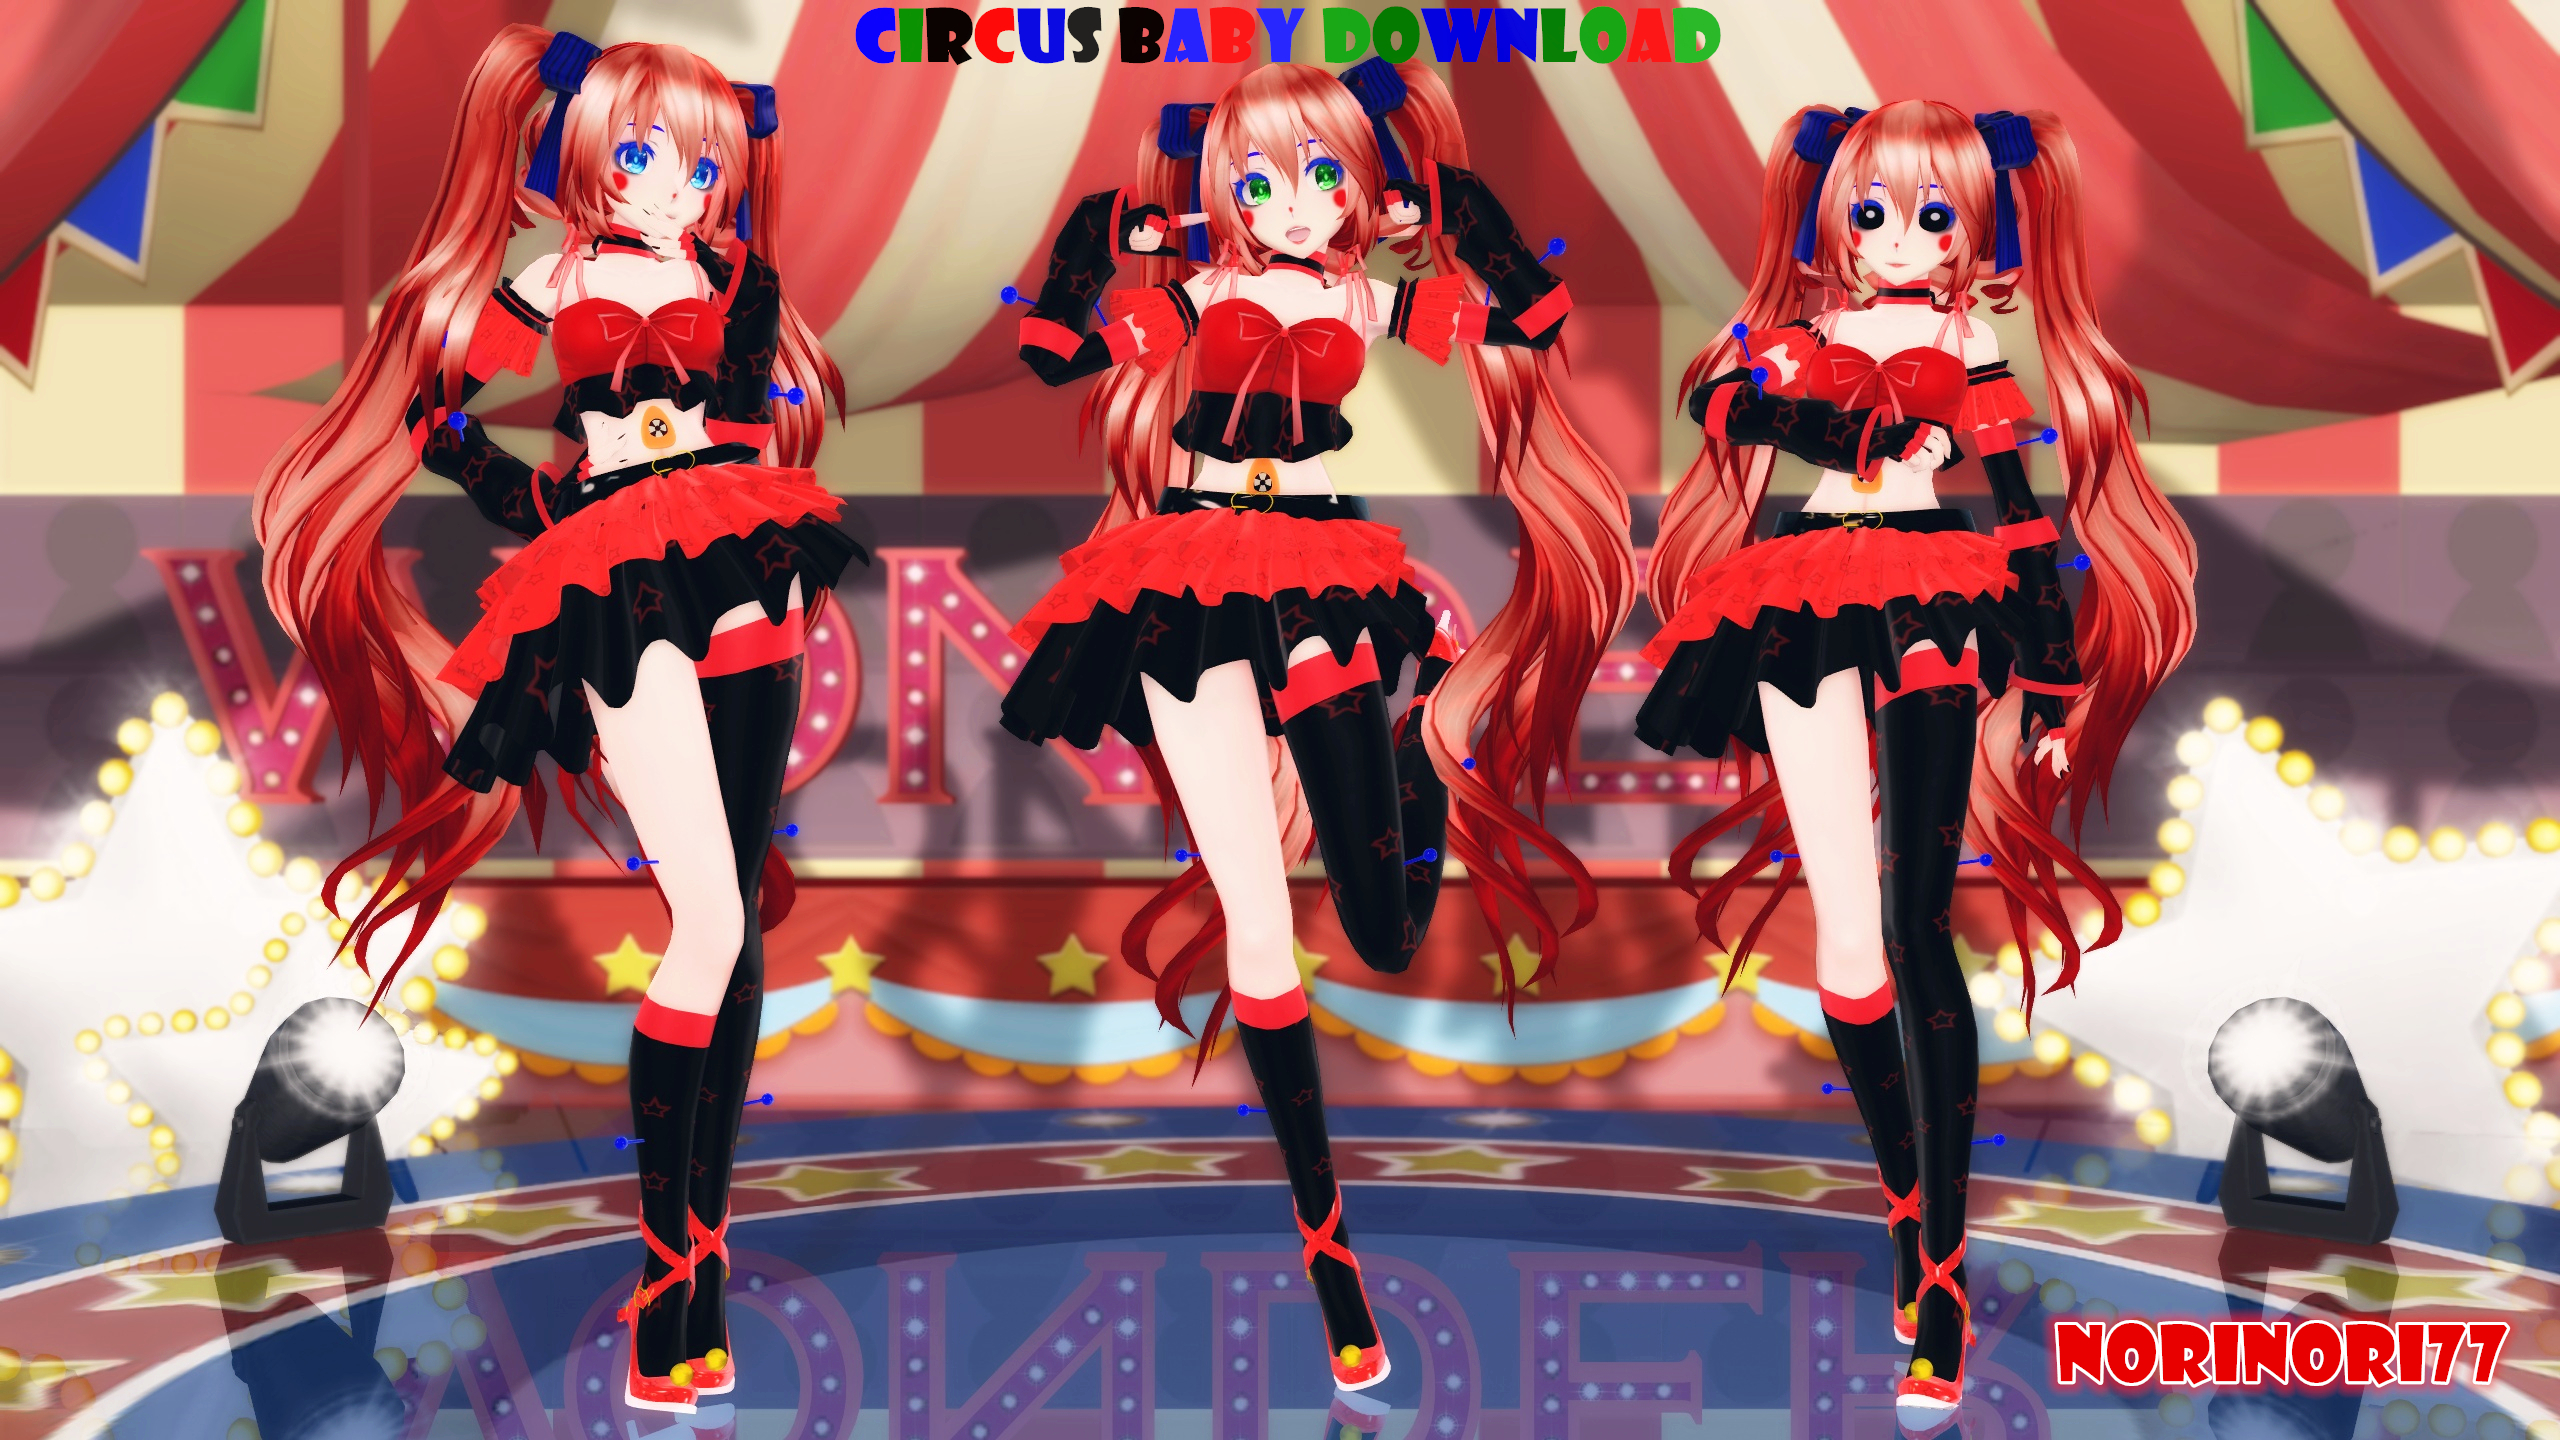 Circus Baby's info, Fnaf 1-6 role play! (Anime style FNaF)